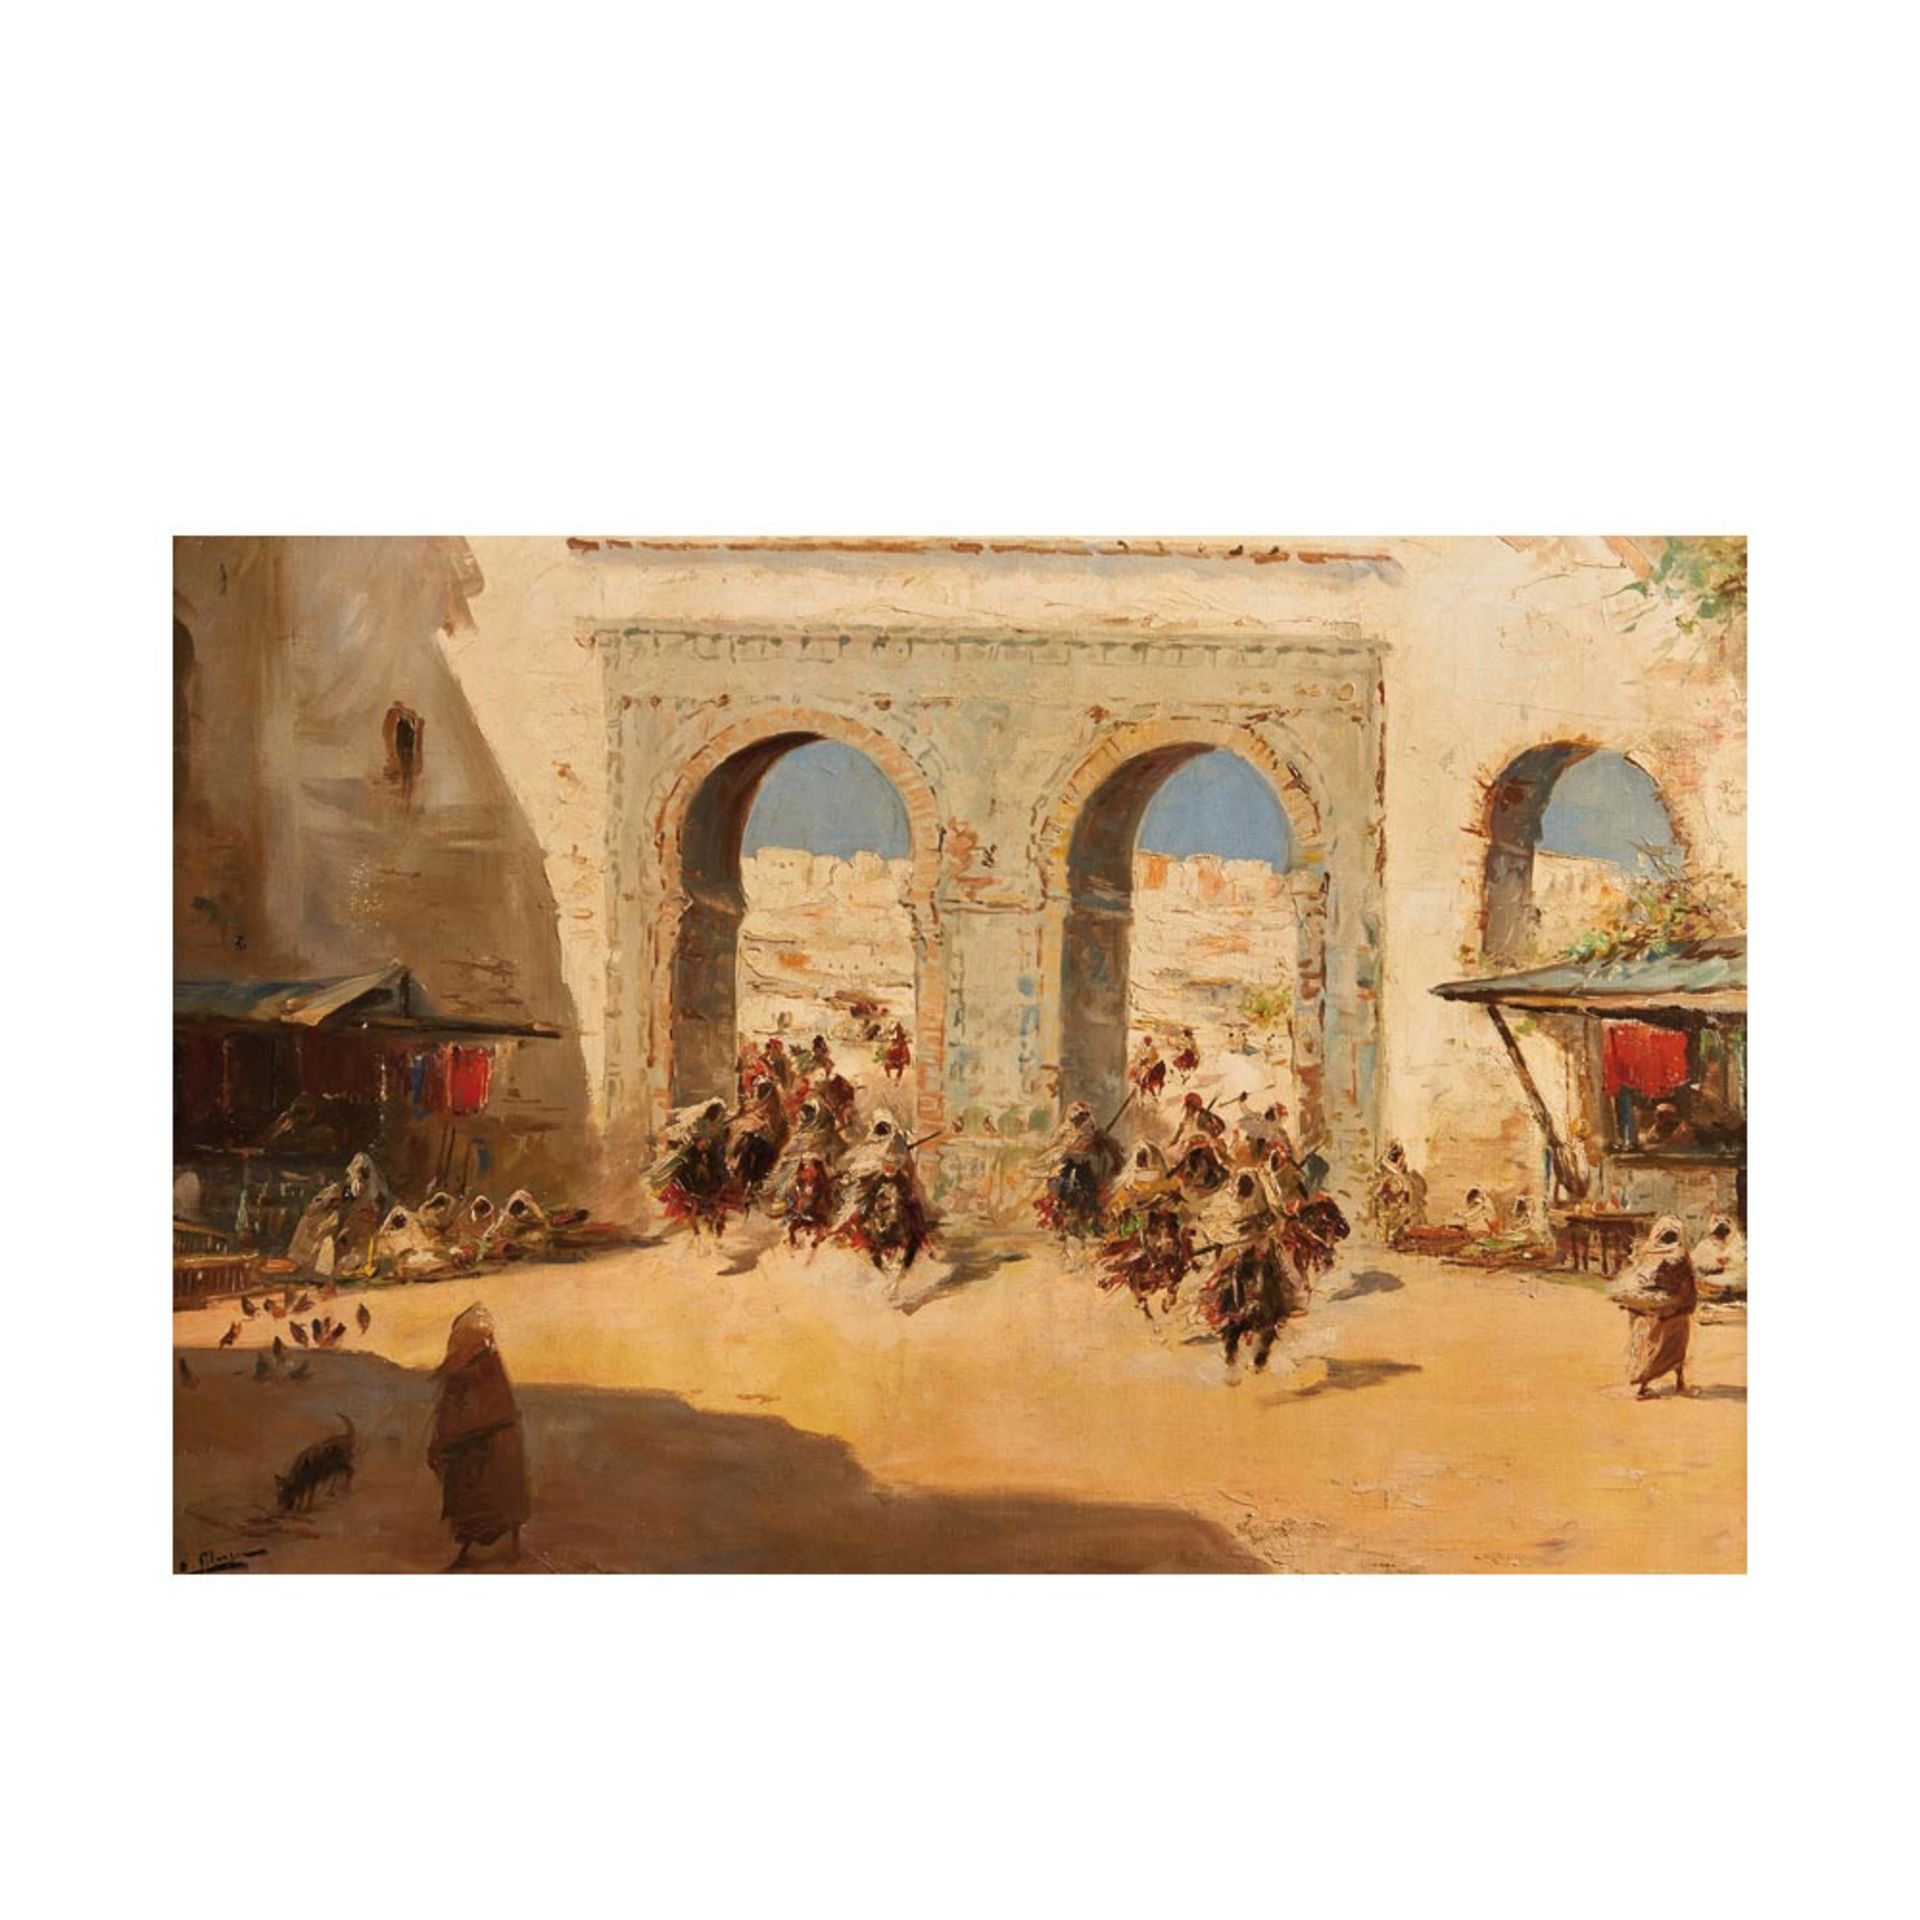 Arabs on horseback. Oil on canvas